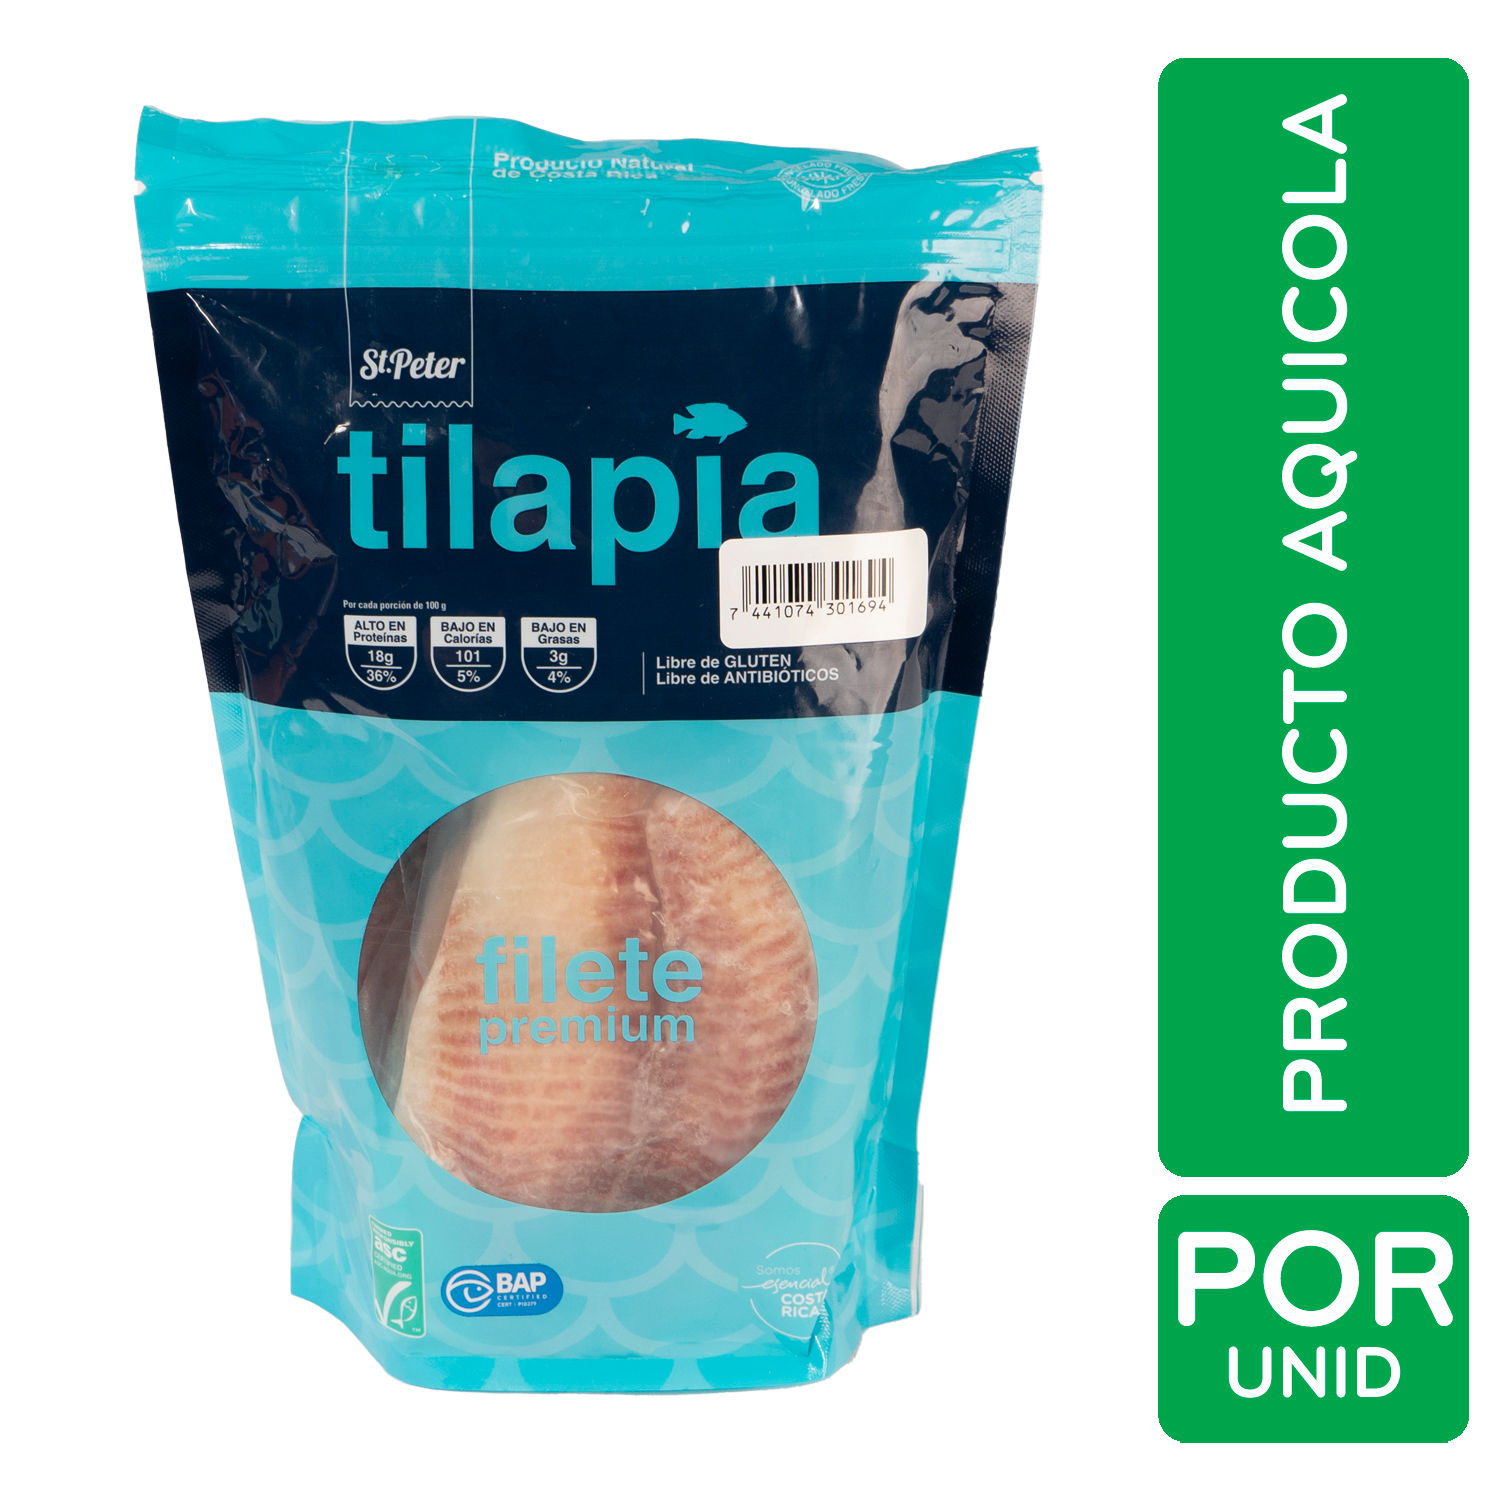 Filet Tilapia Aquicola Congelado Auto Mercado Paquete 630 G